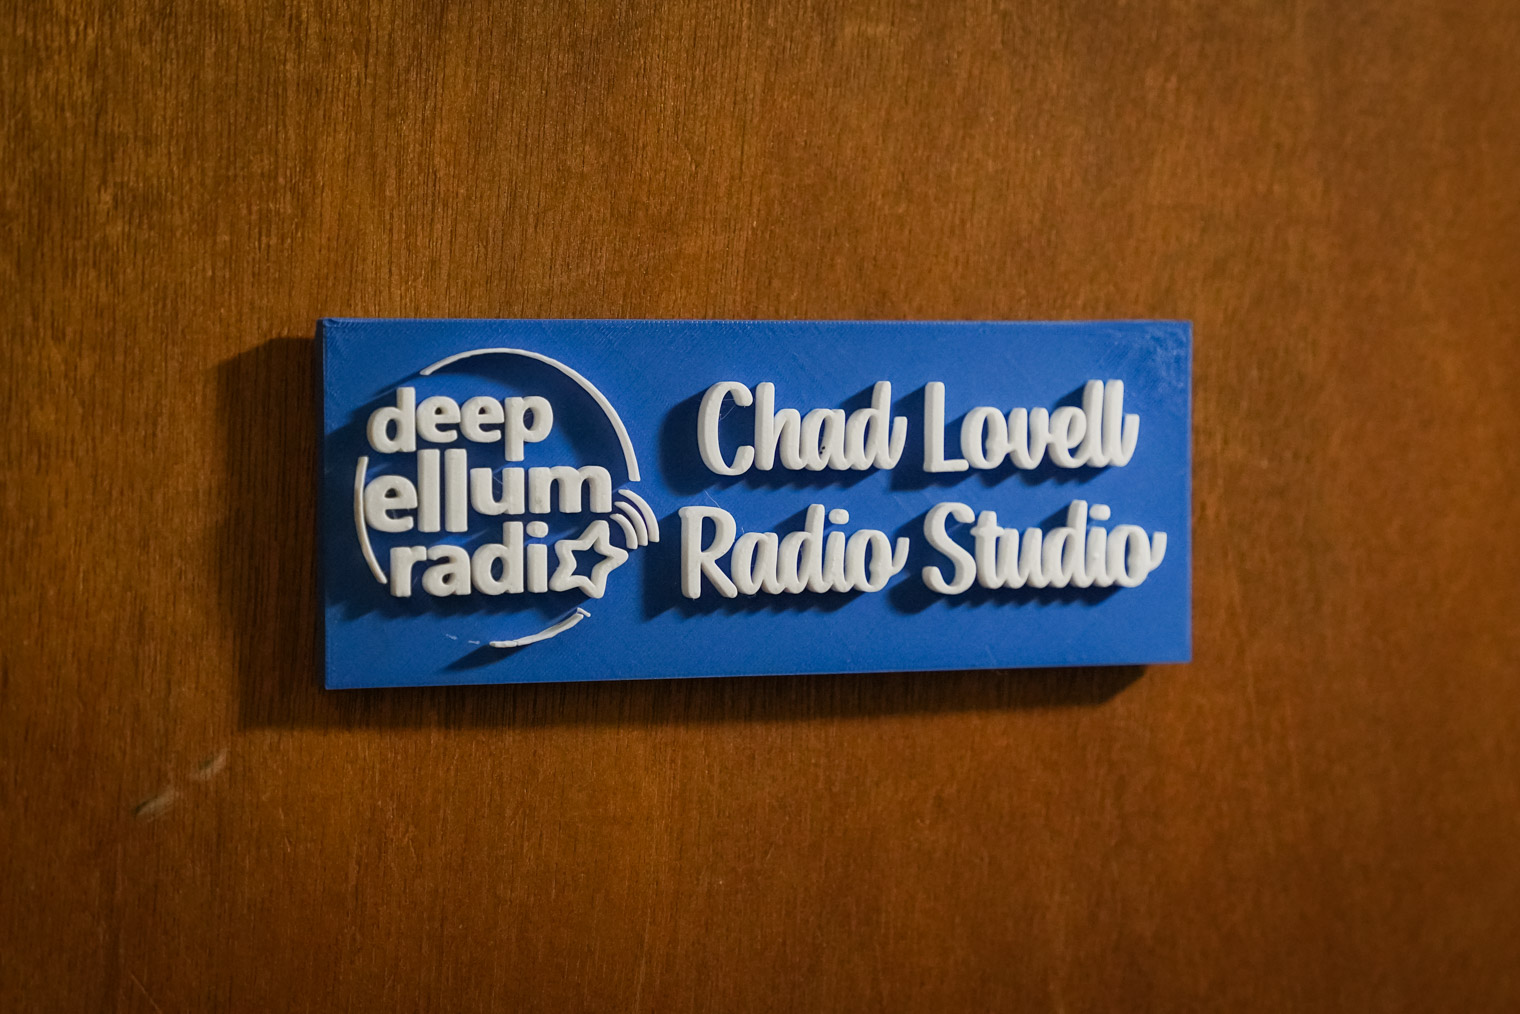 A sign on a door that says "deep ellum radio, Chad Lovell Radio Studio"